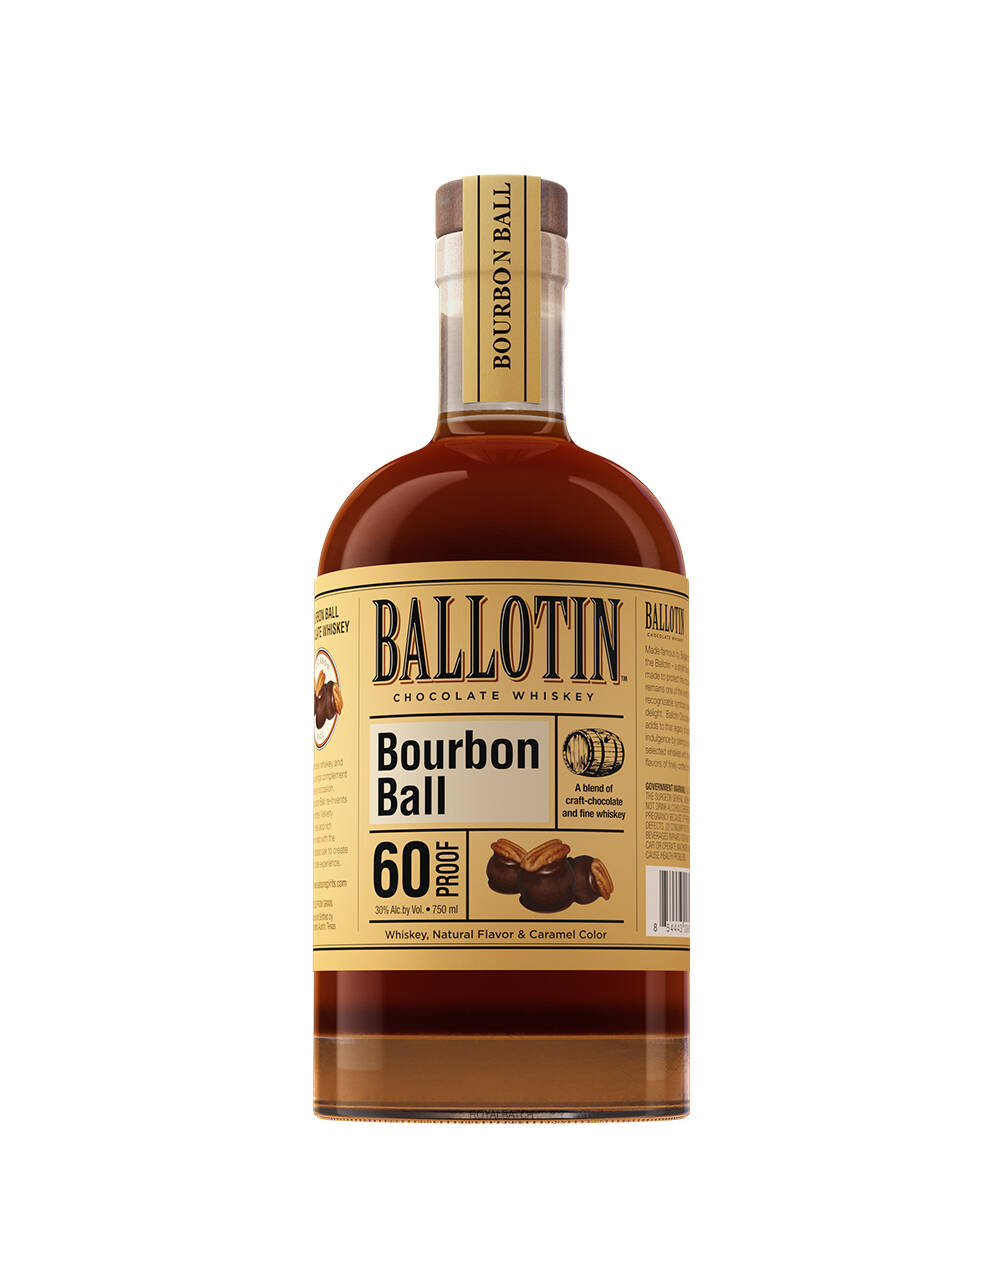 Ballotin Bourbon Ball Chocolate Flavored Whiskey